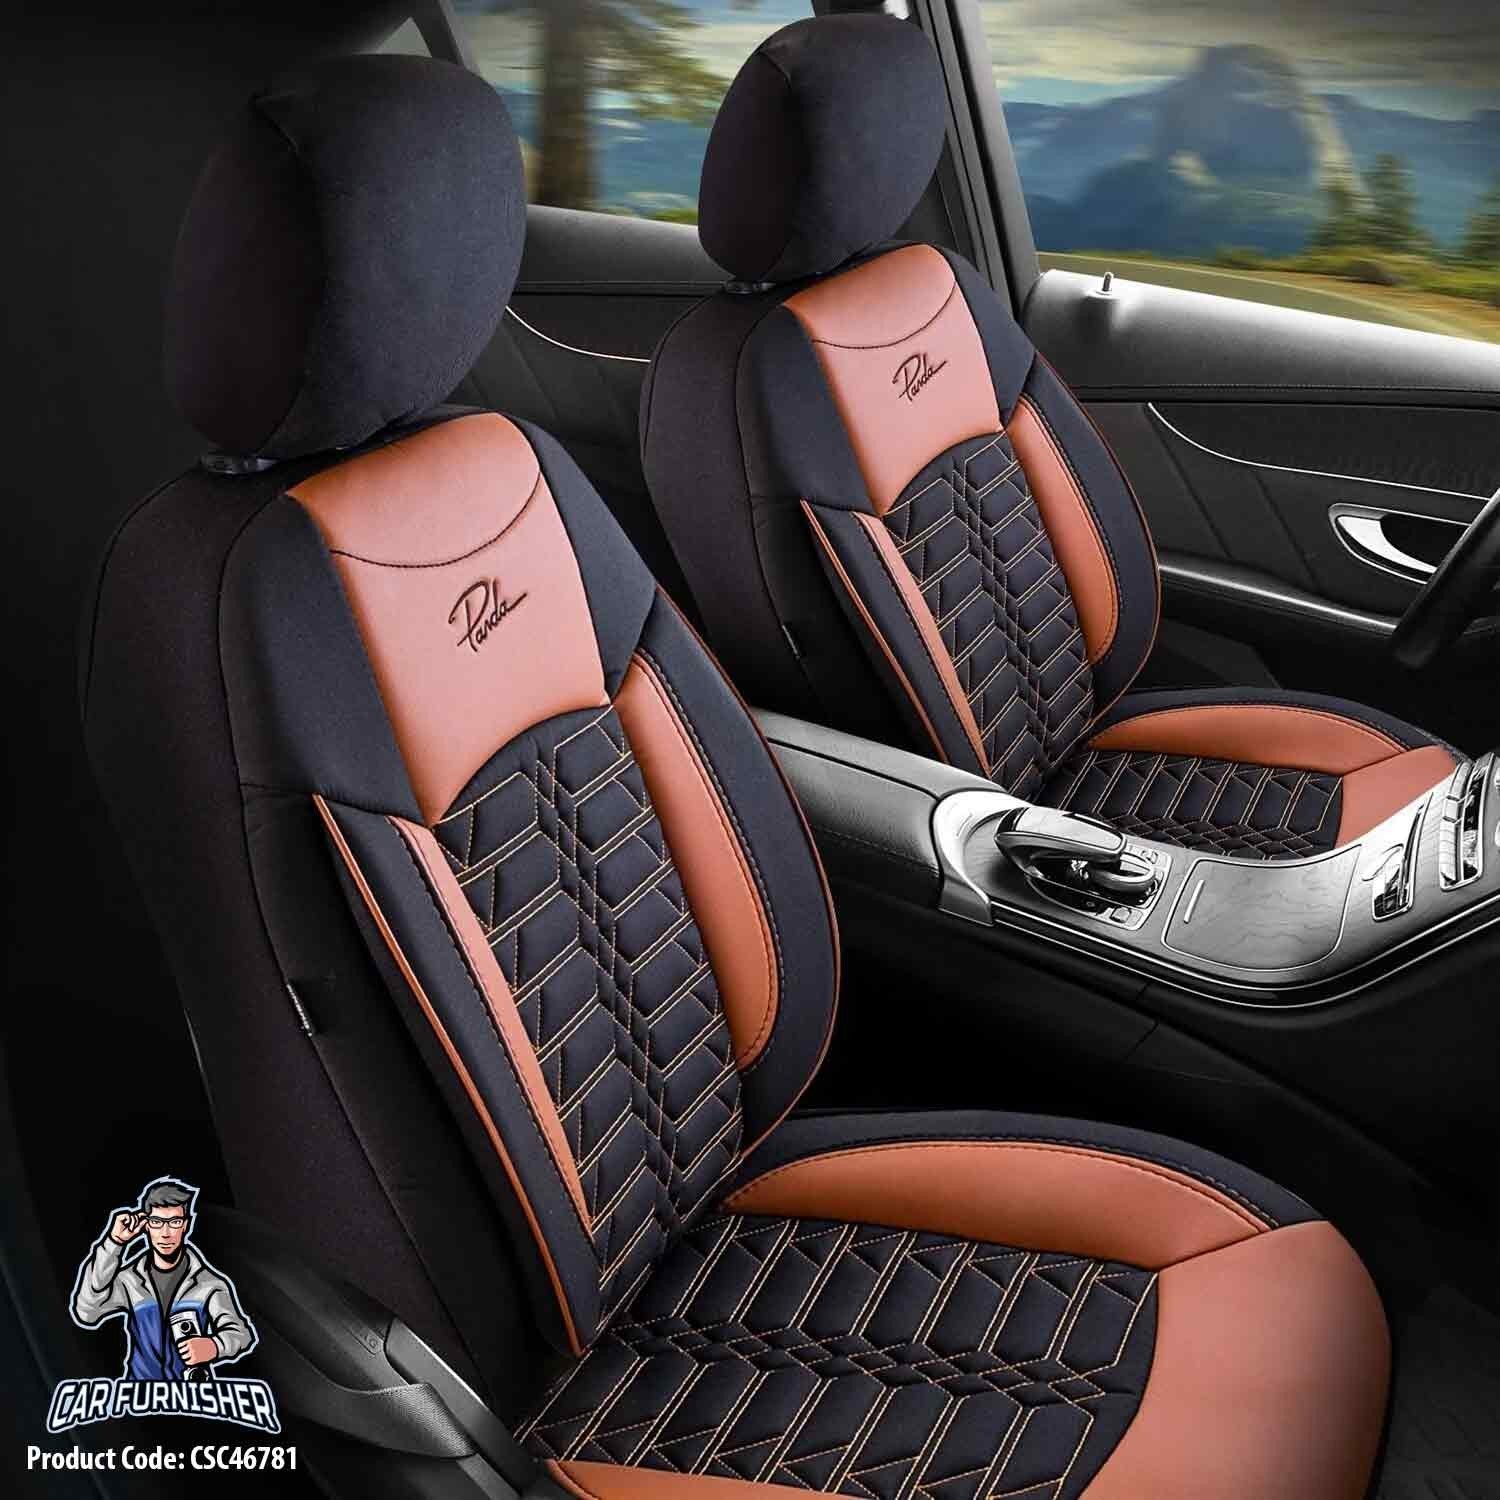 Mercedes 190 Seat Covers Venetian Design Tan-Snuff 5 Seats + Headrests (Full Set) Leather & Jacquard Fabric